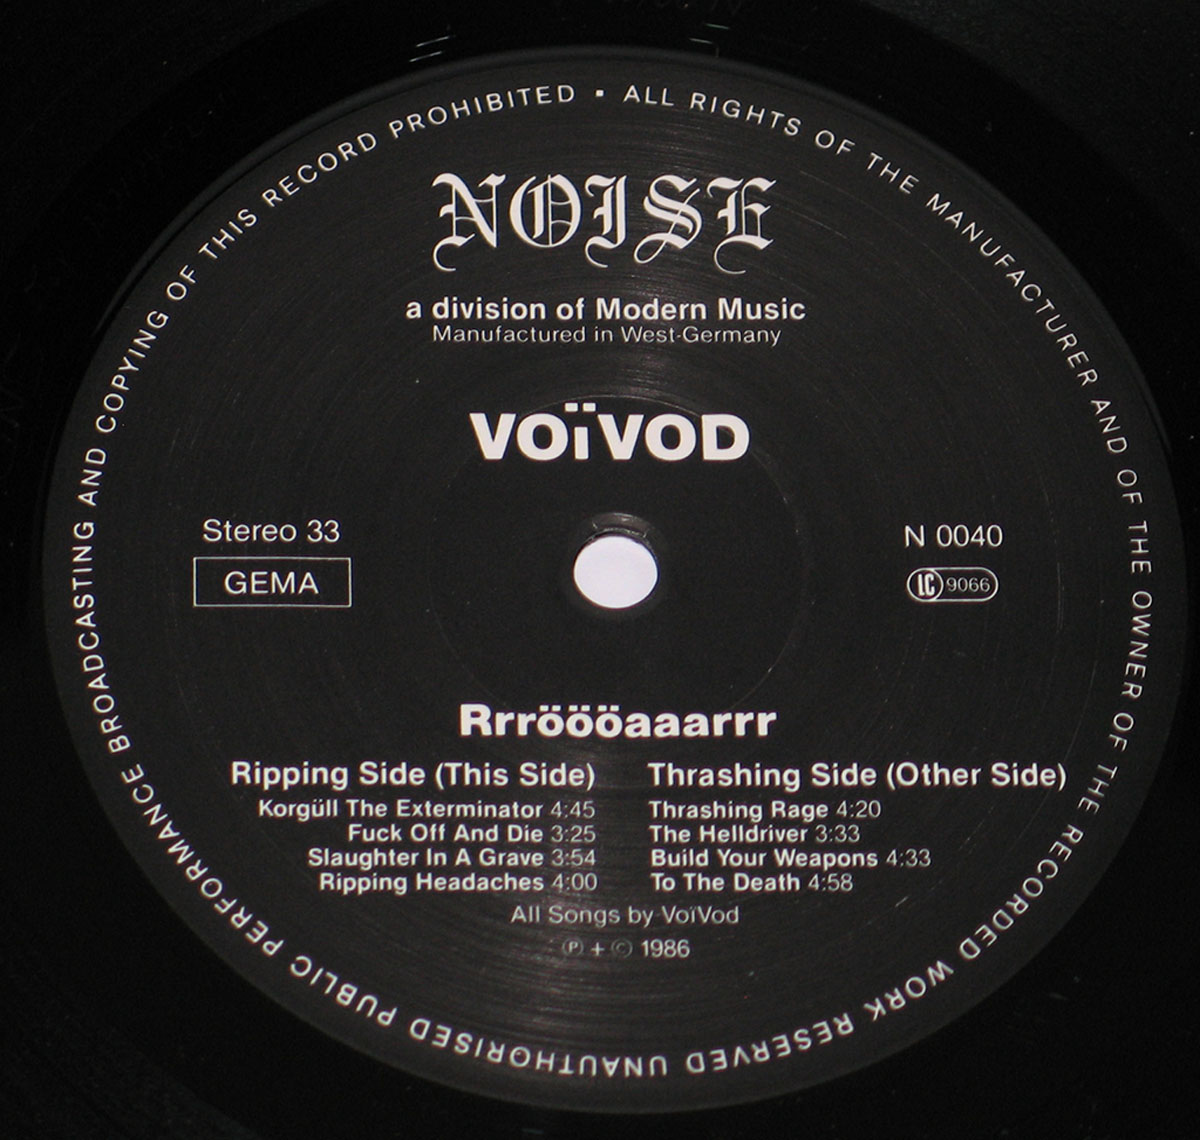 Voivod Rrröööaaarrr is the second album released by this Canadian